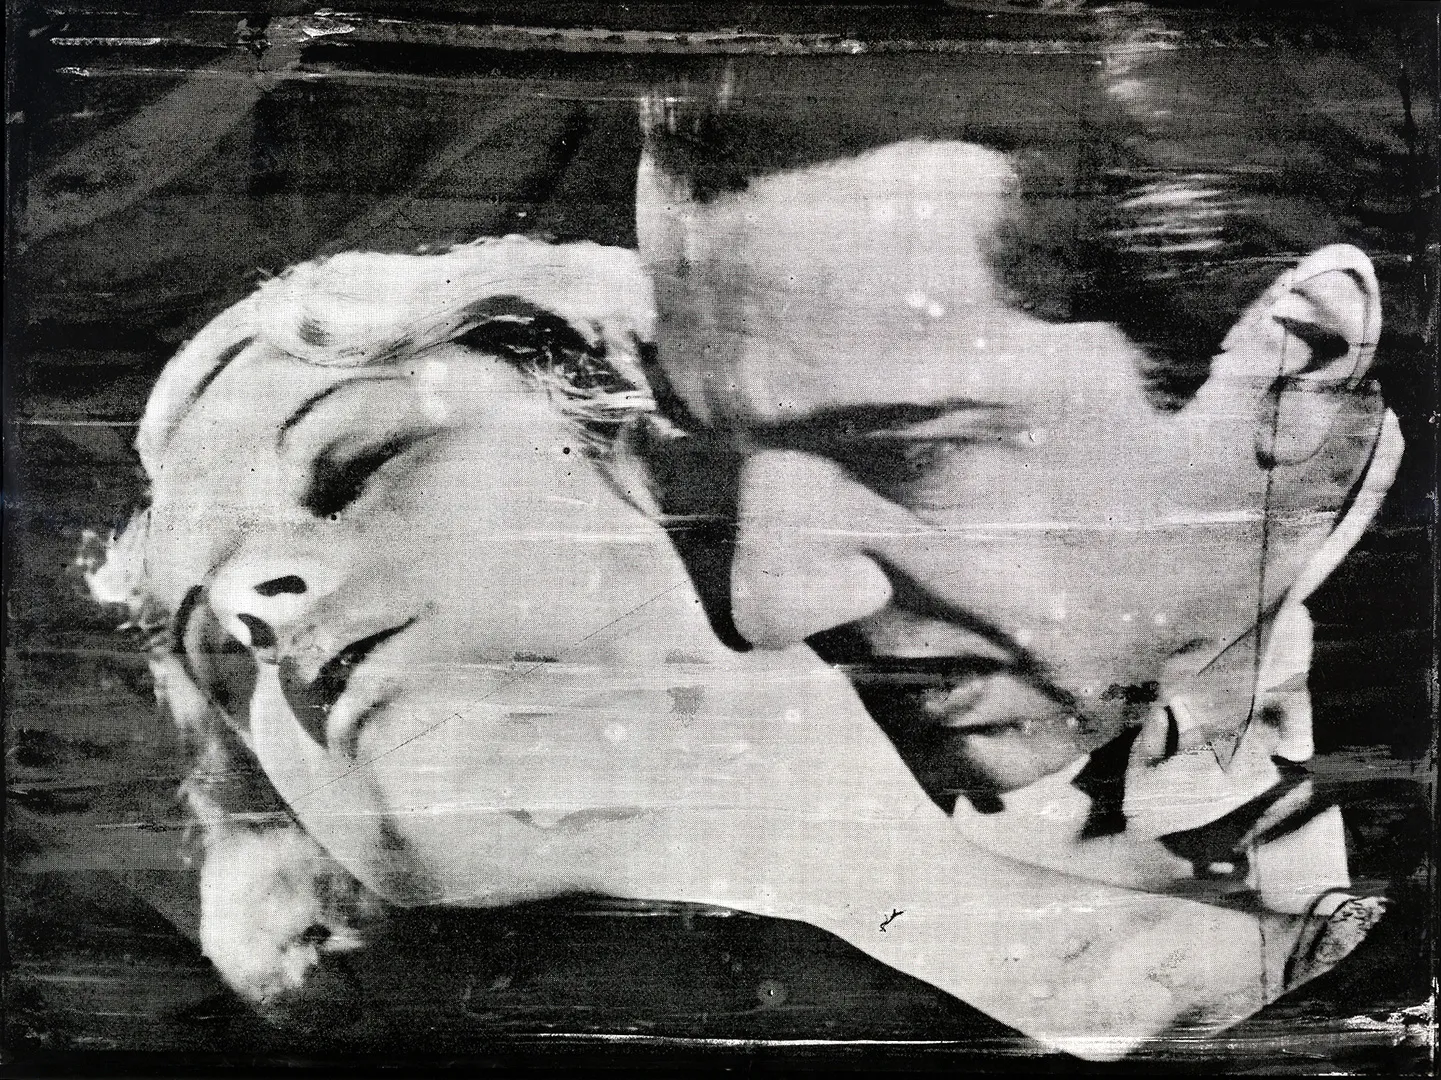 Andy Warhol - The Kiss (Bela Lugosi), 1963, screenprint on paper